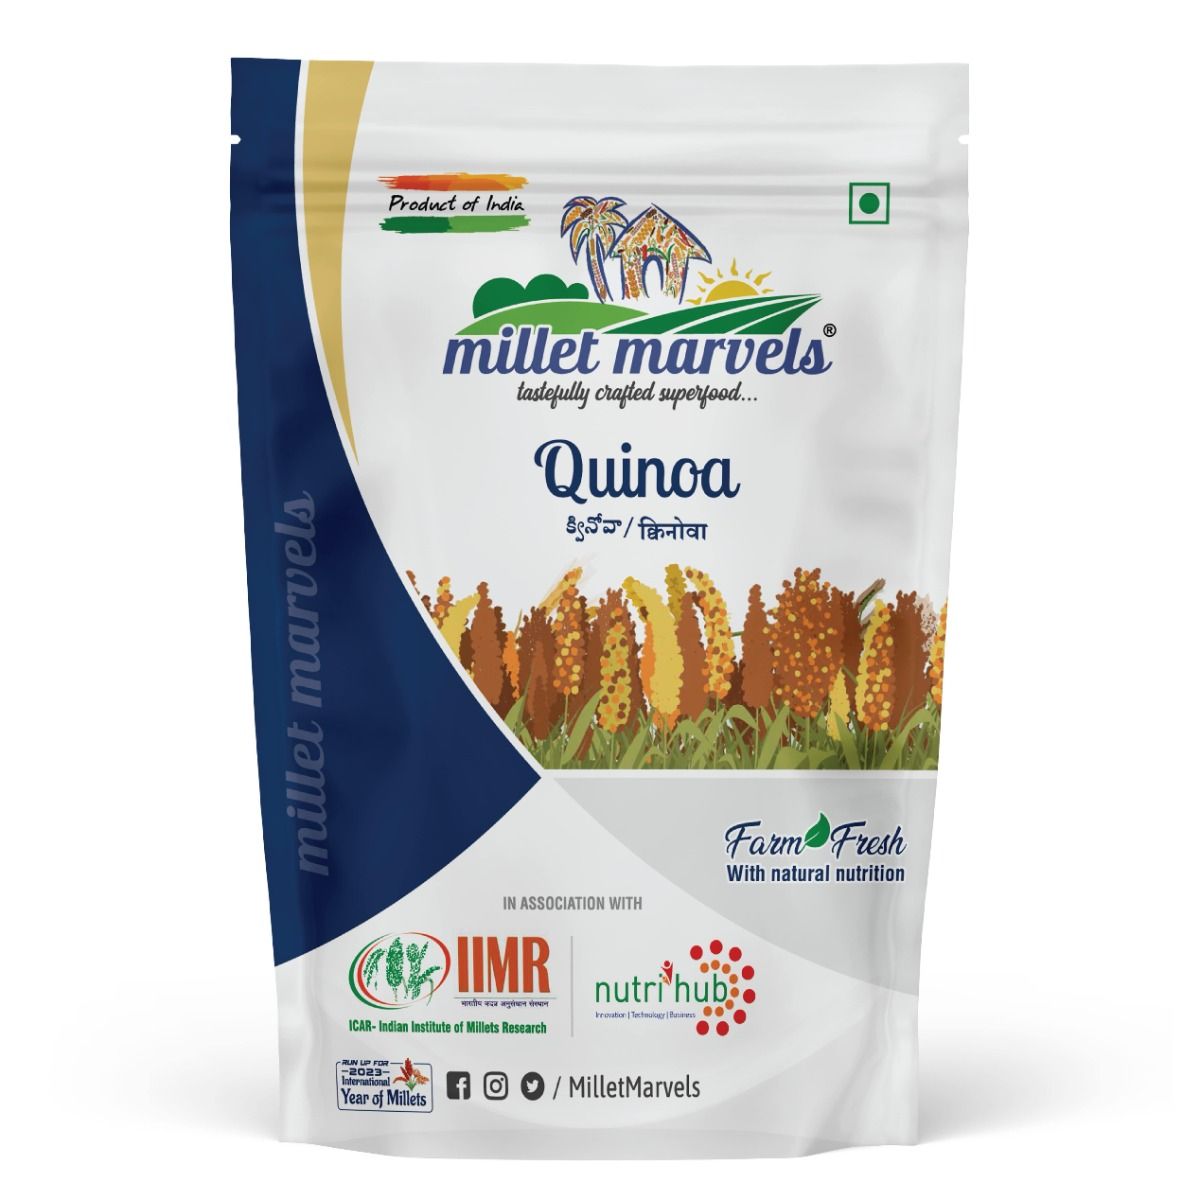 Millet Marvels Quinoa, 500 gm, Pack of 1 